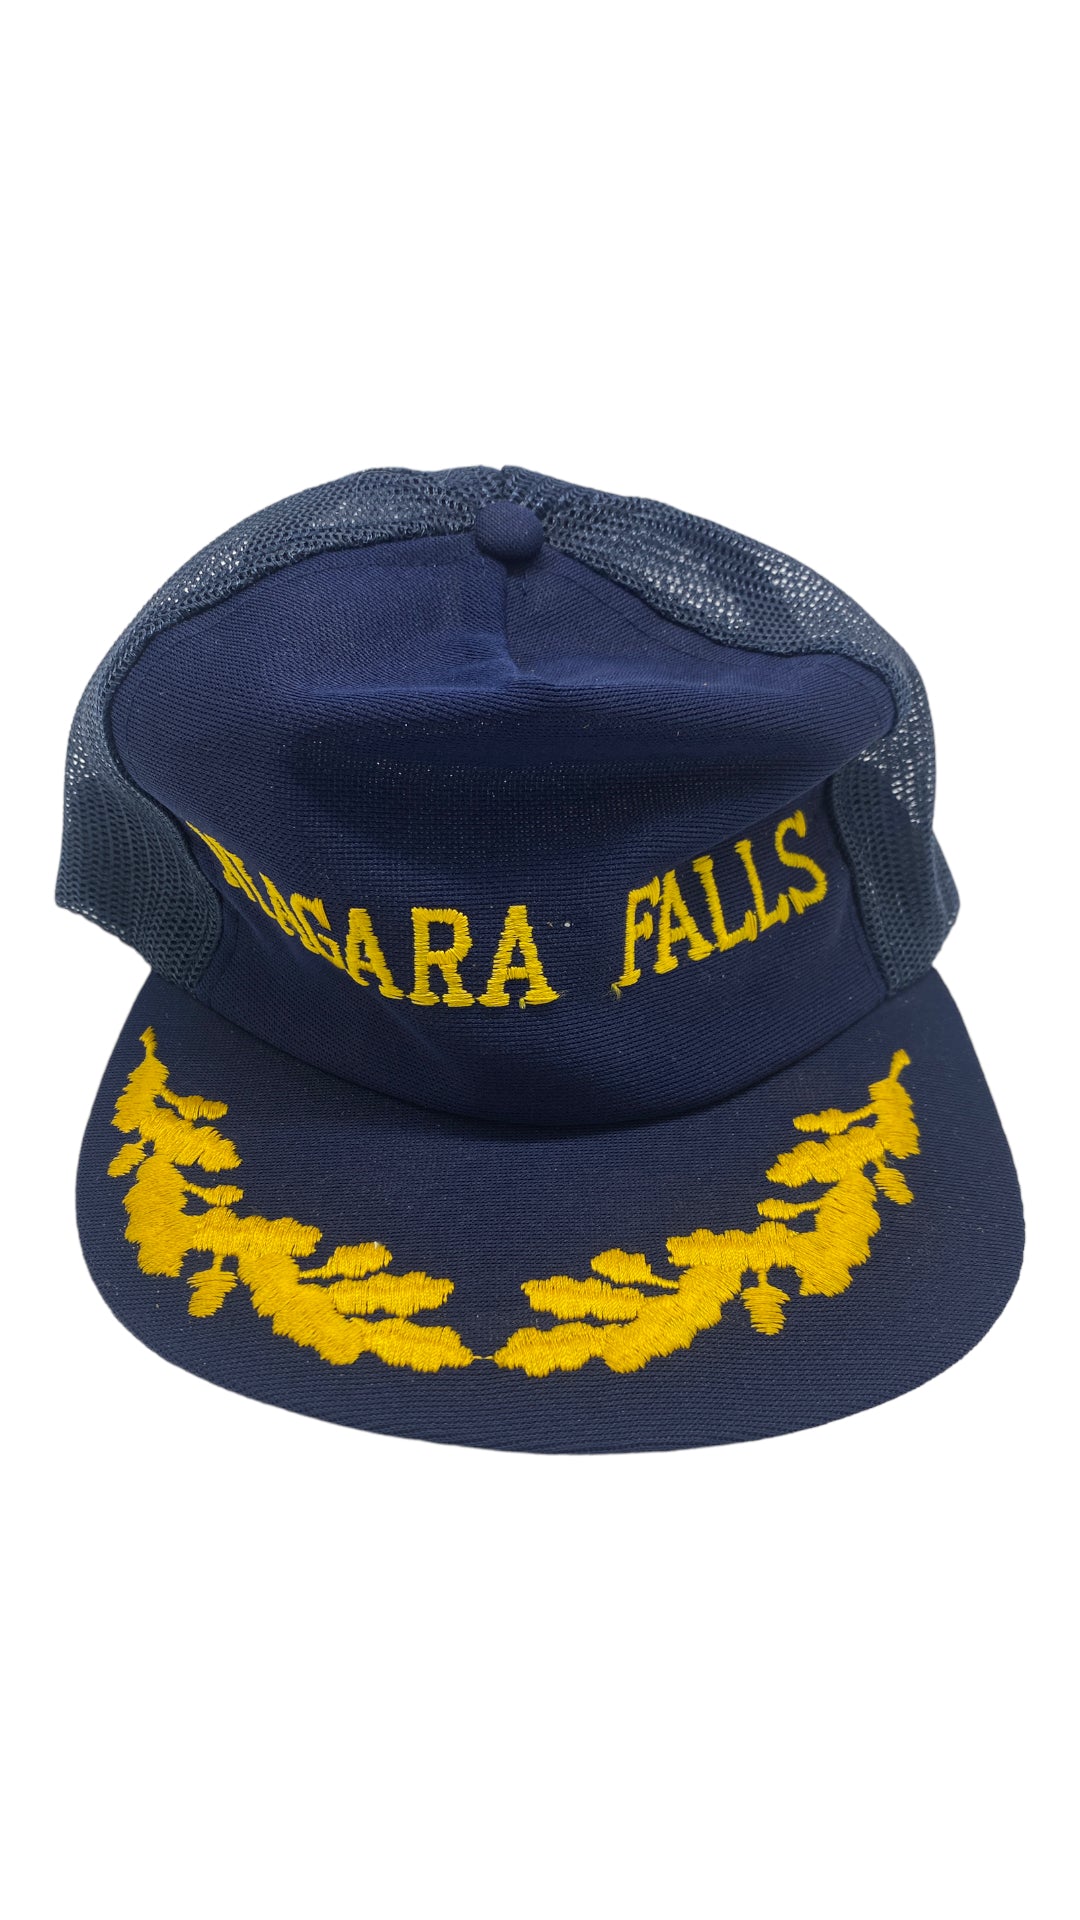 VTG Niagara Falls Snapback Hat